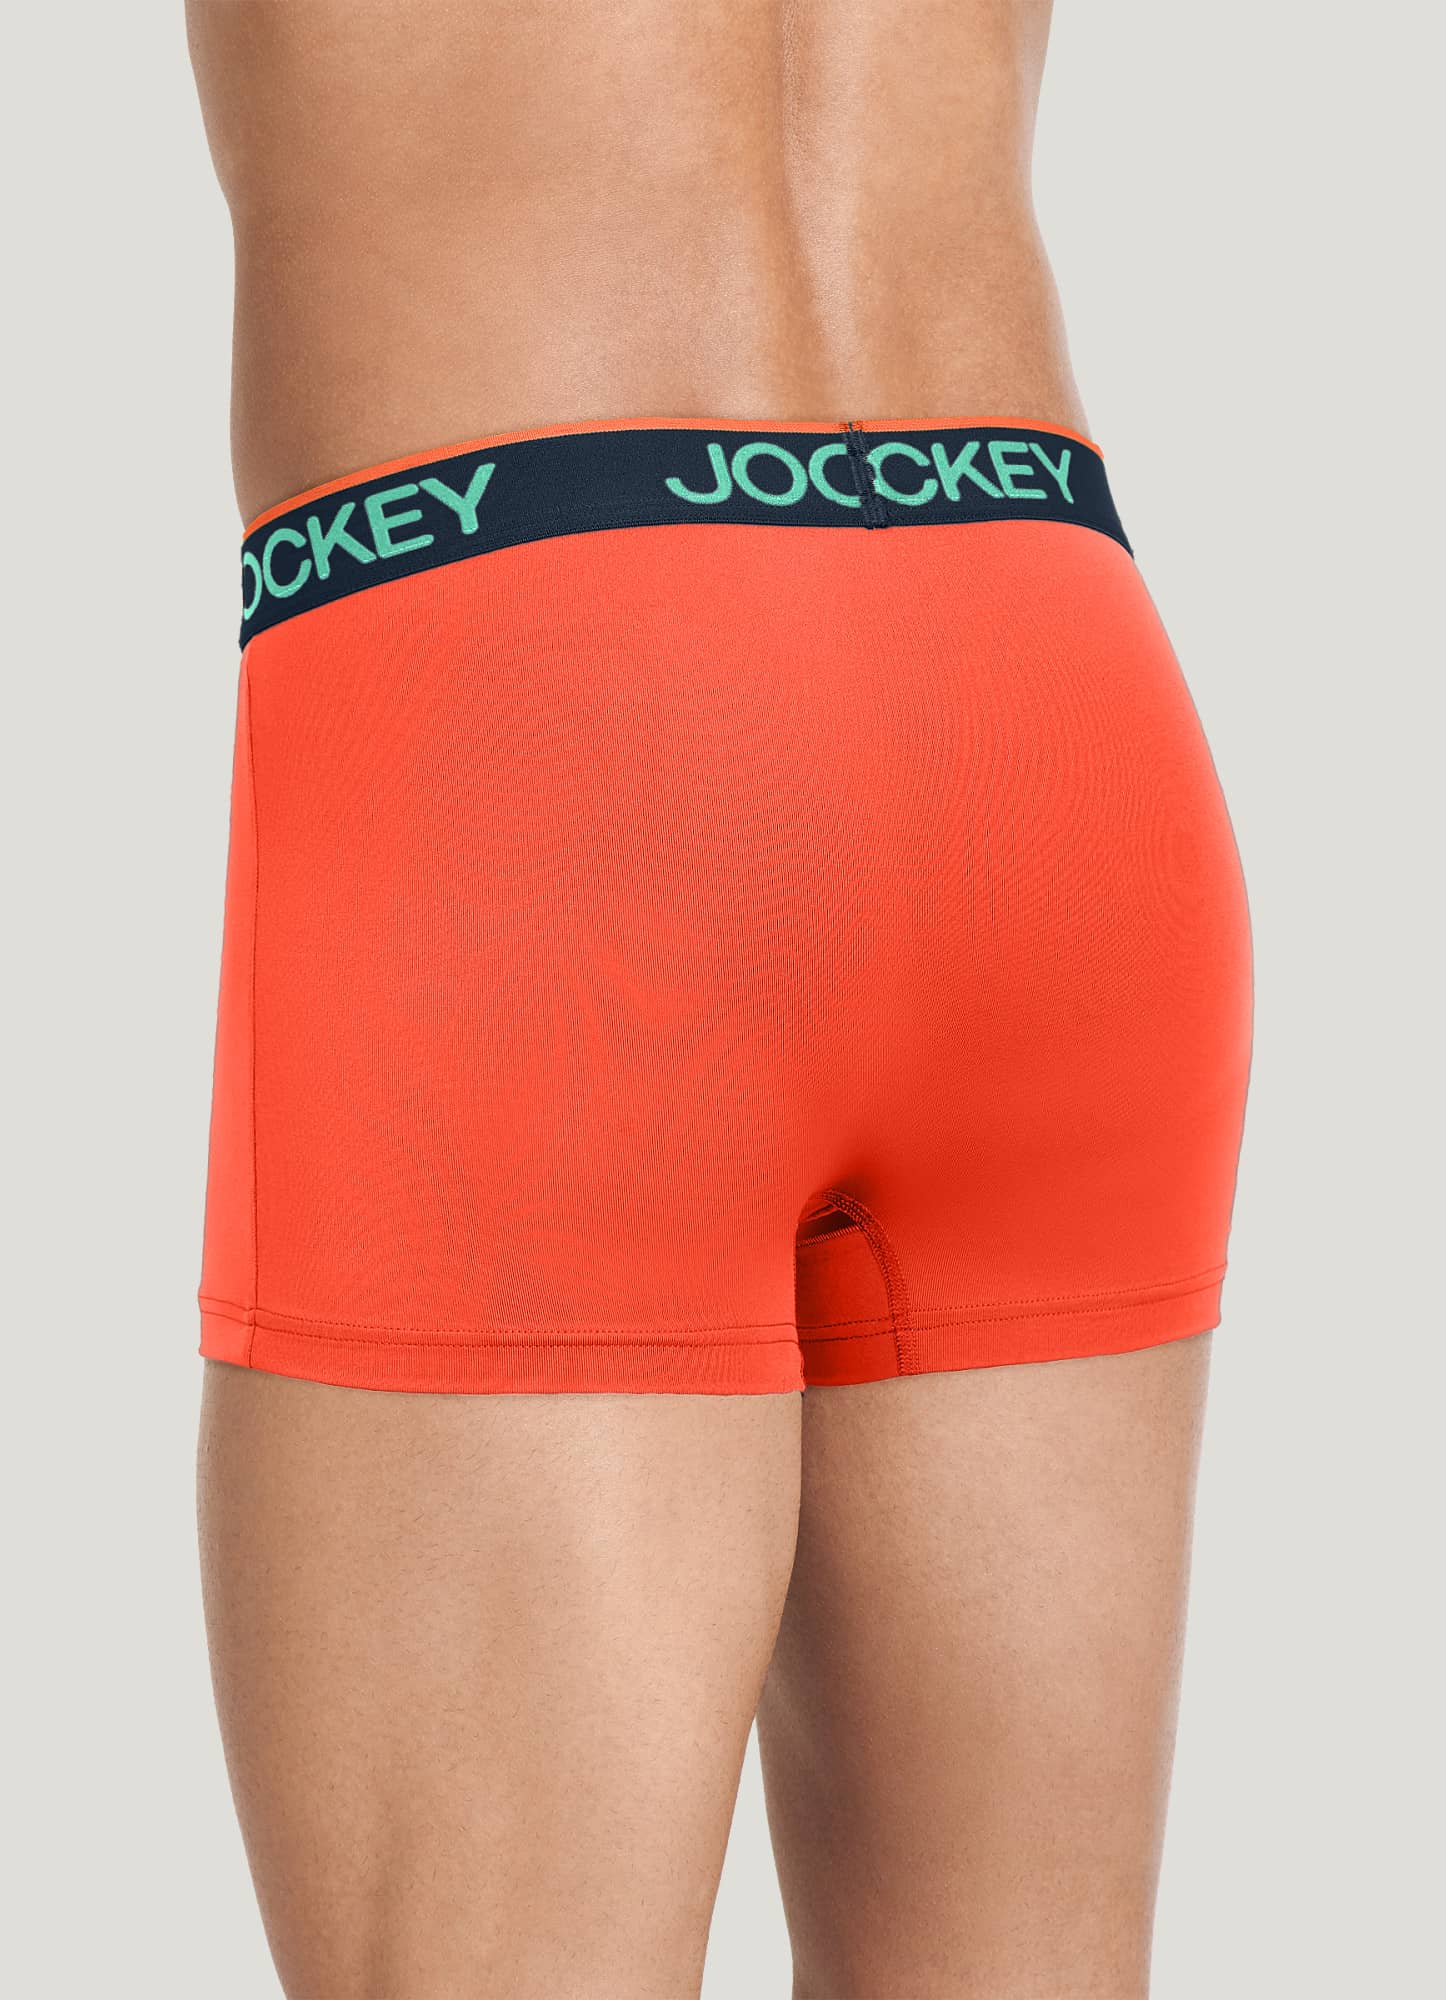 Jockey Underwear Ad -  Canada